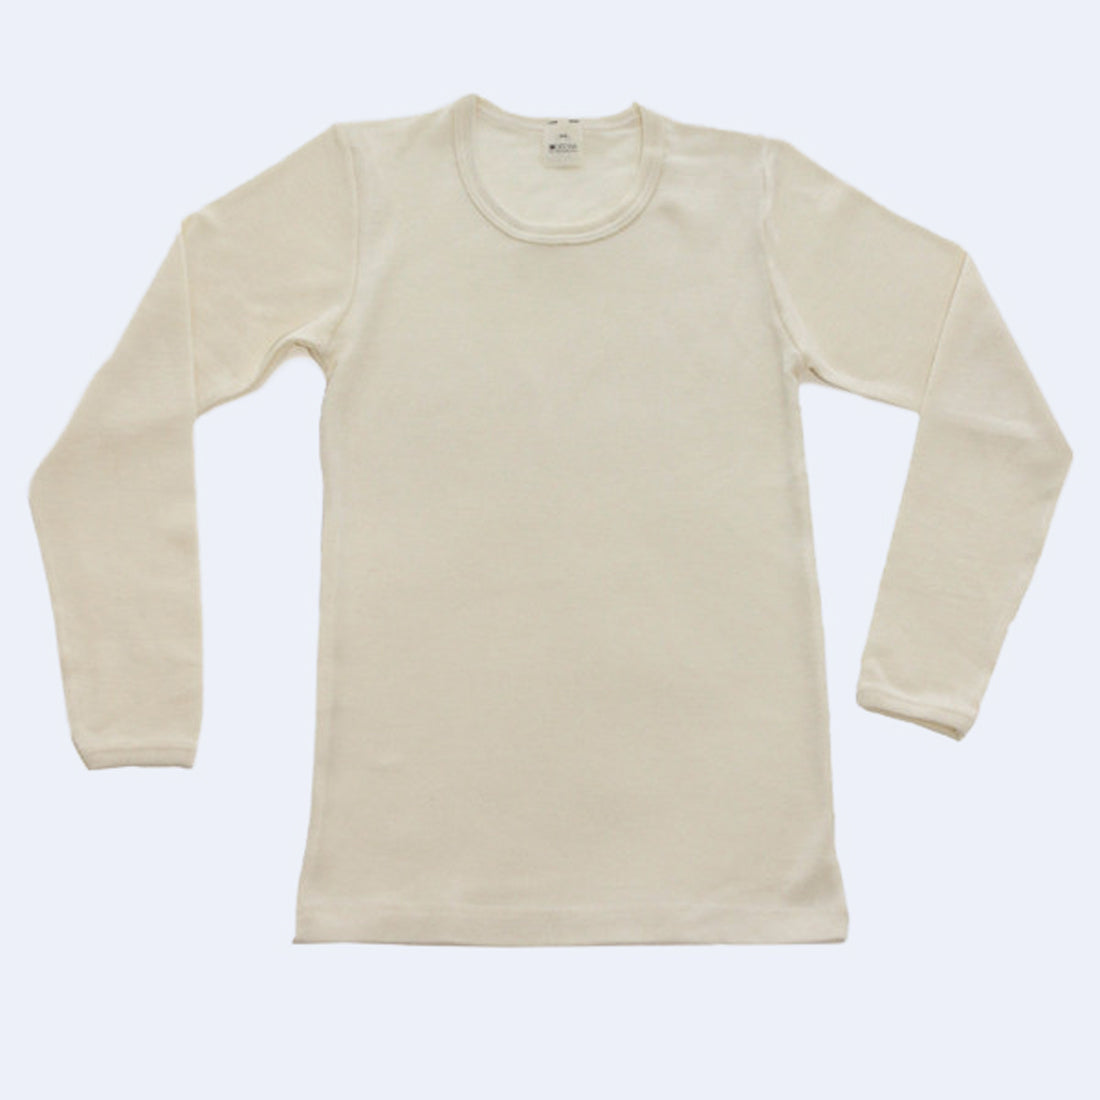 Hocosa of Switzerland Kids' Wool/Silk Blend Long Sleeve Shirt